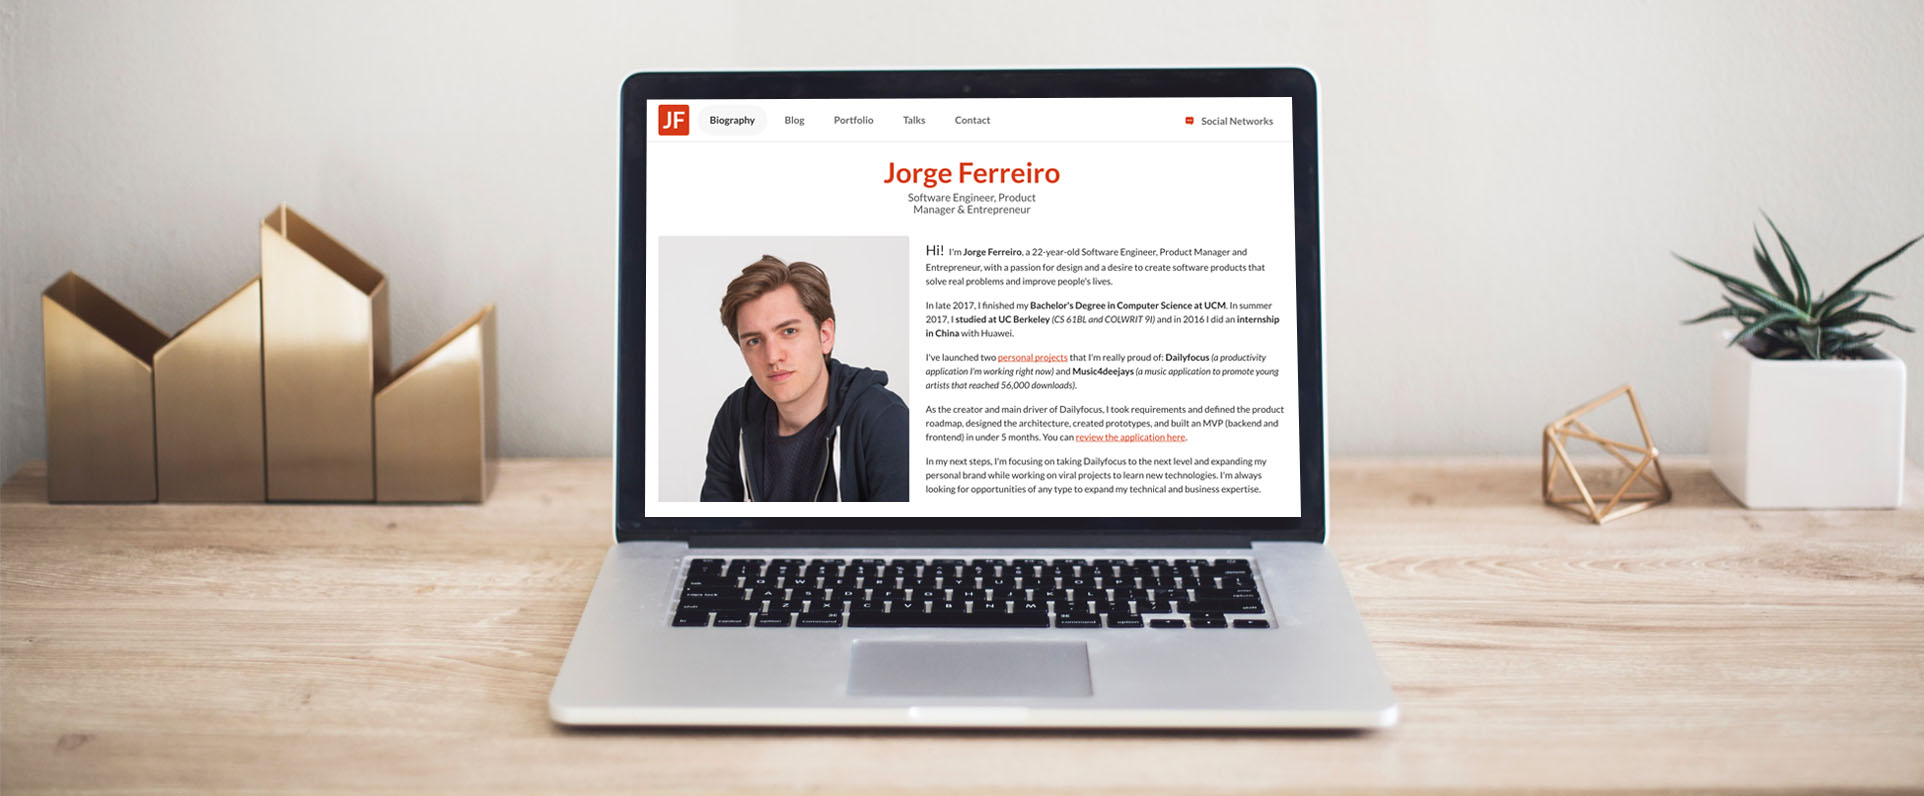 jorge ferreiro blog welcome post biography